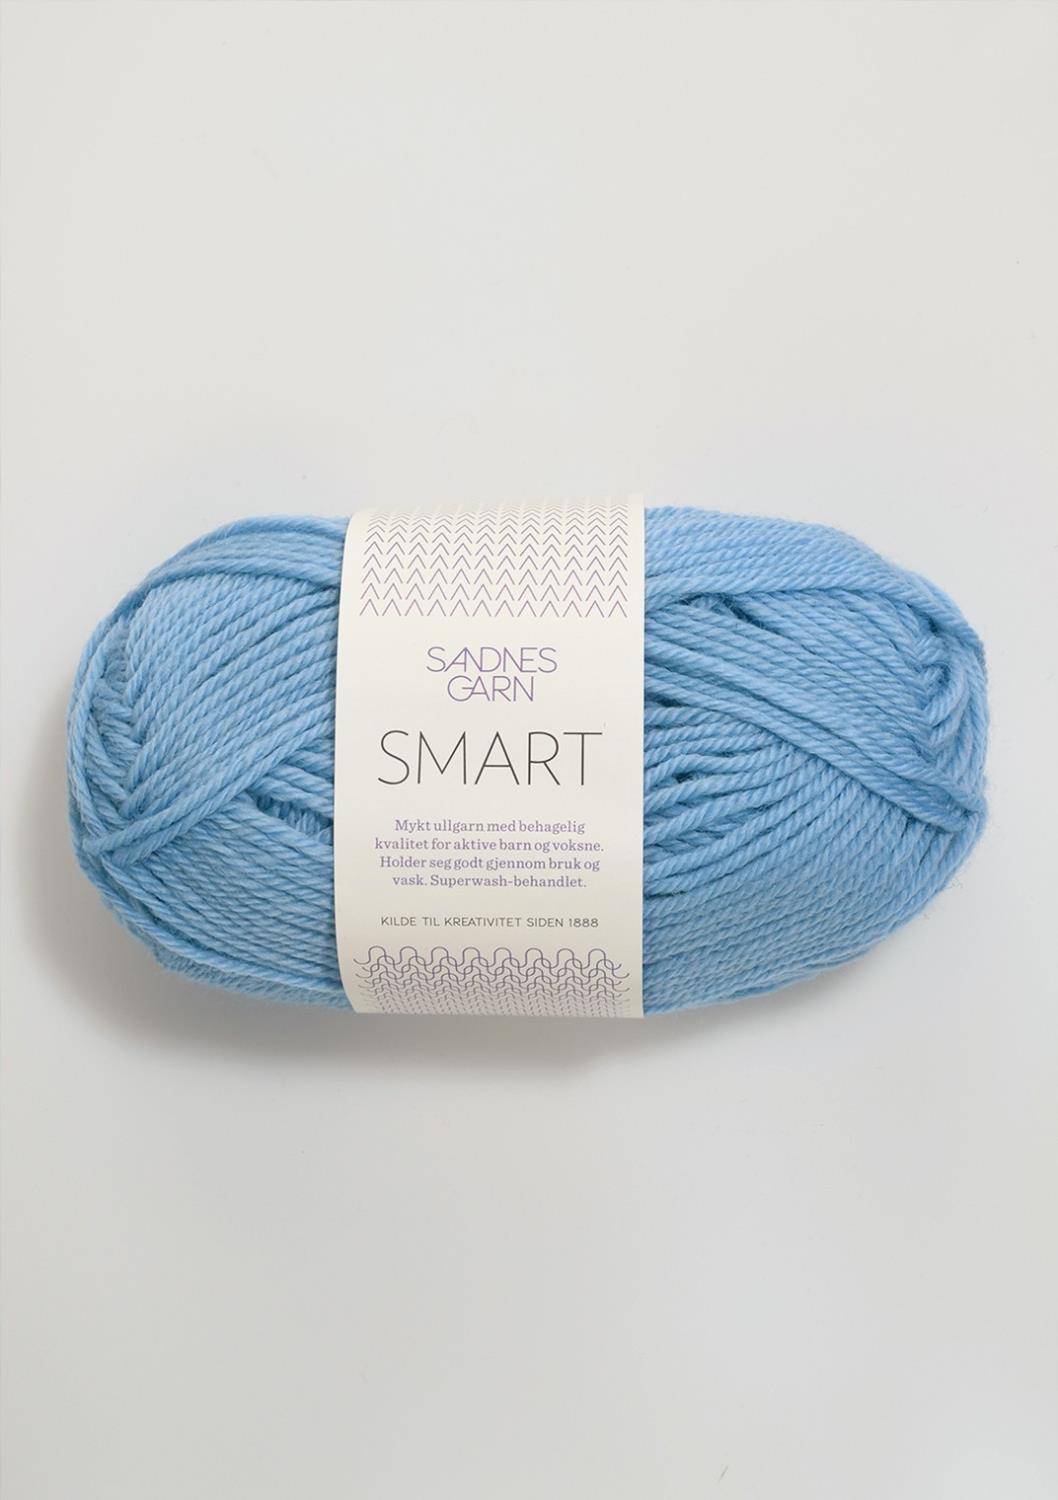 Smart Sandnes 5904 - Lys Blå